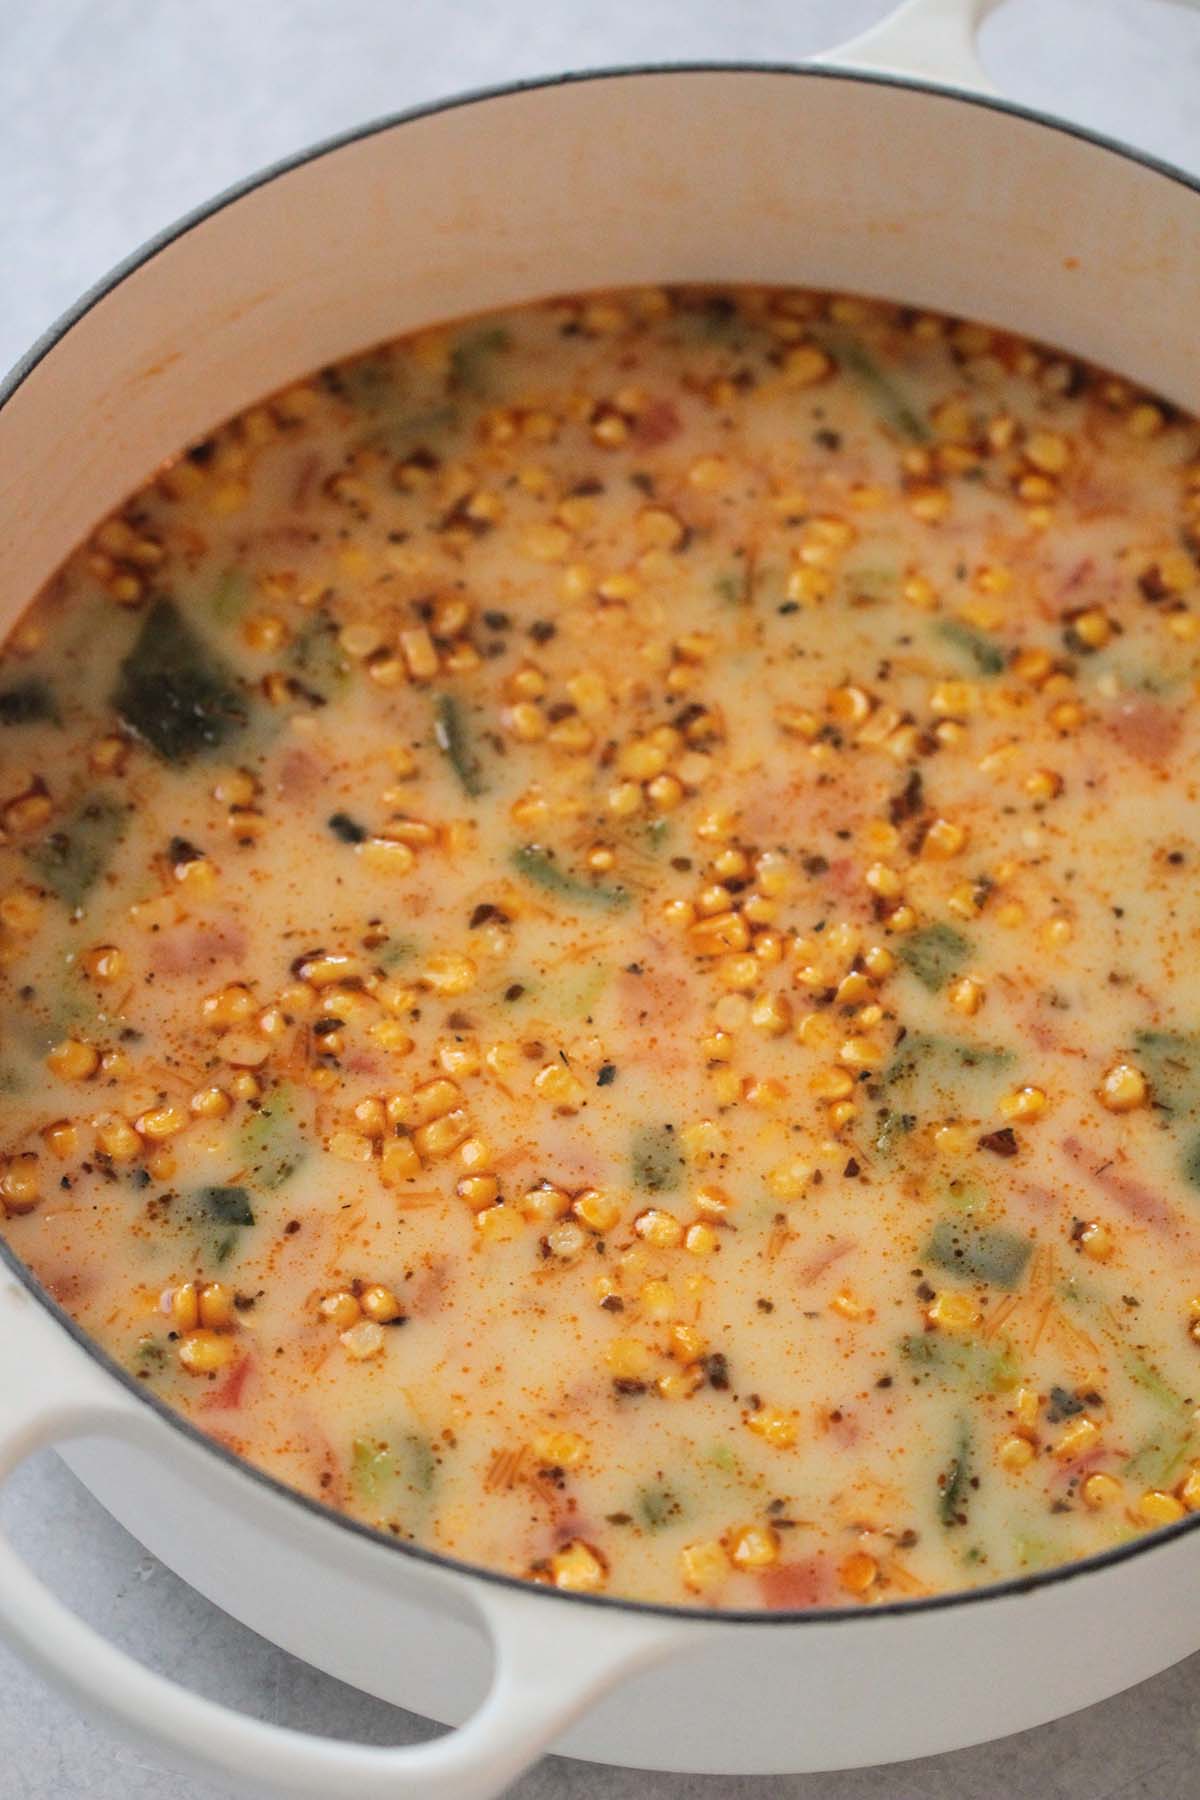 cheese and potato soup (caldo de queso) in a large white pot. 